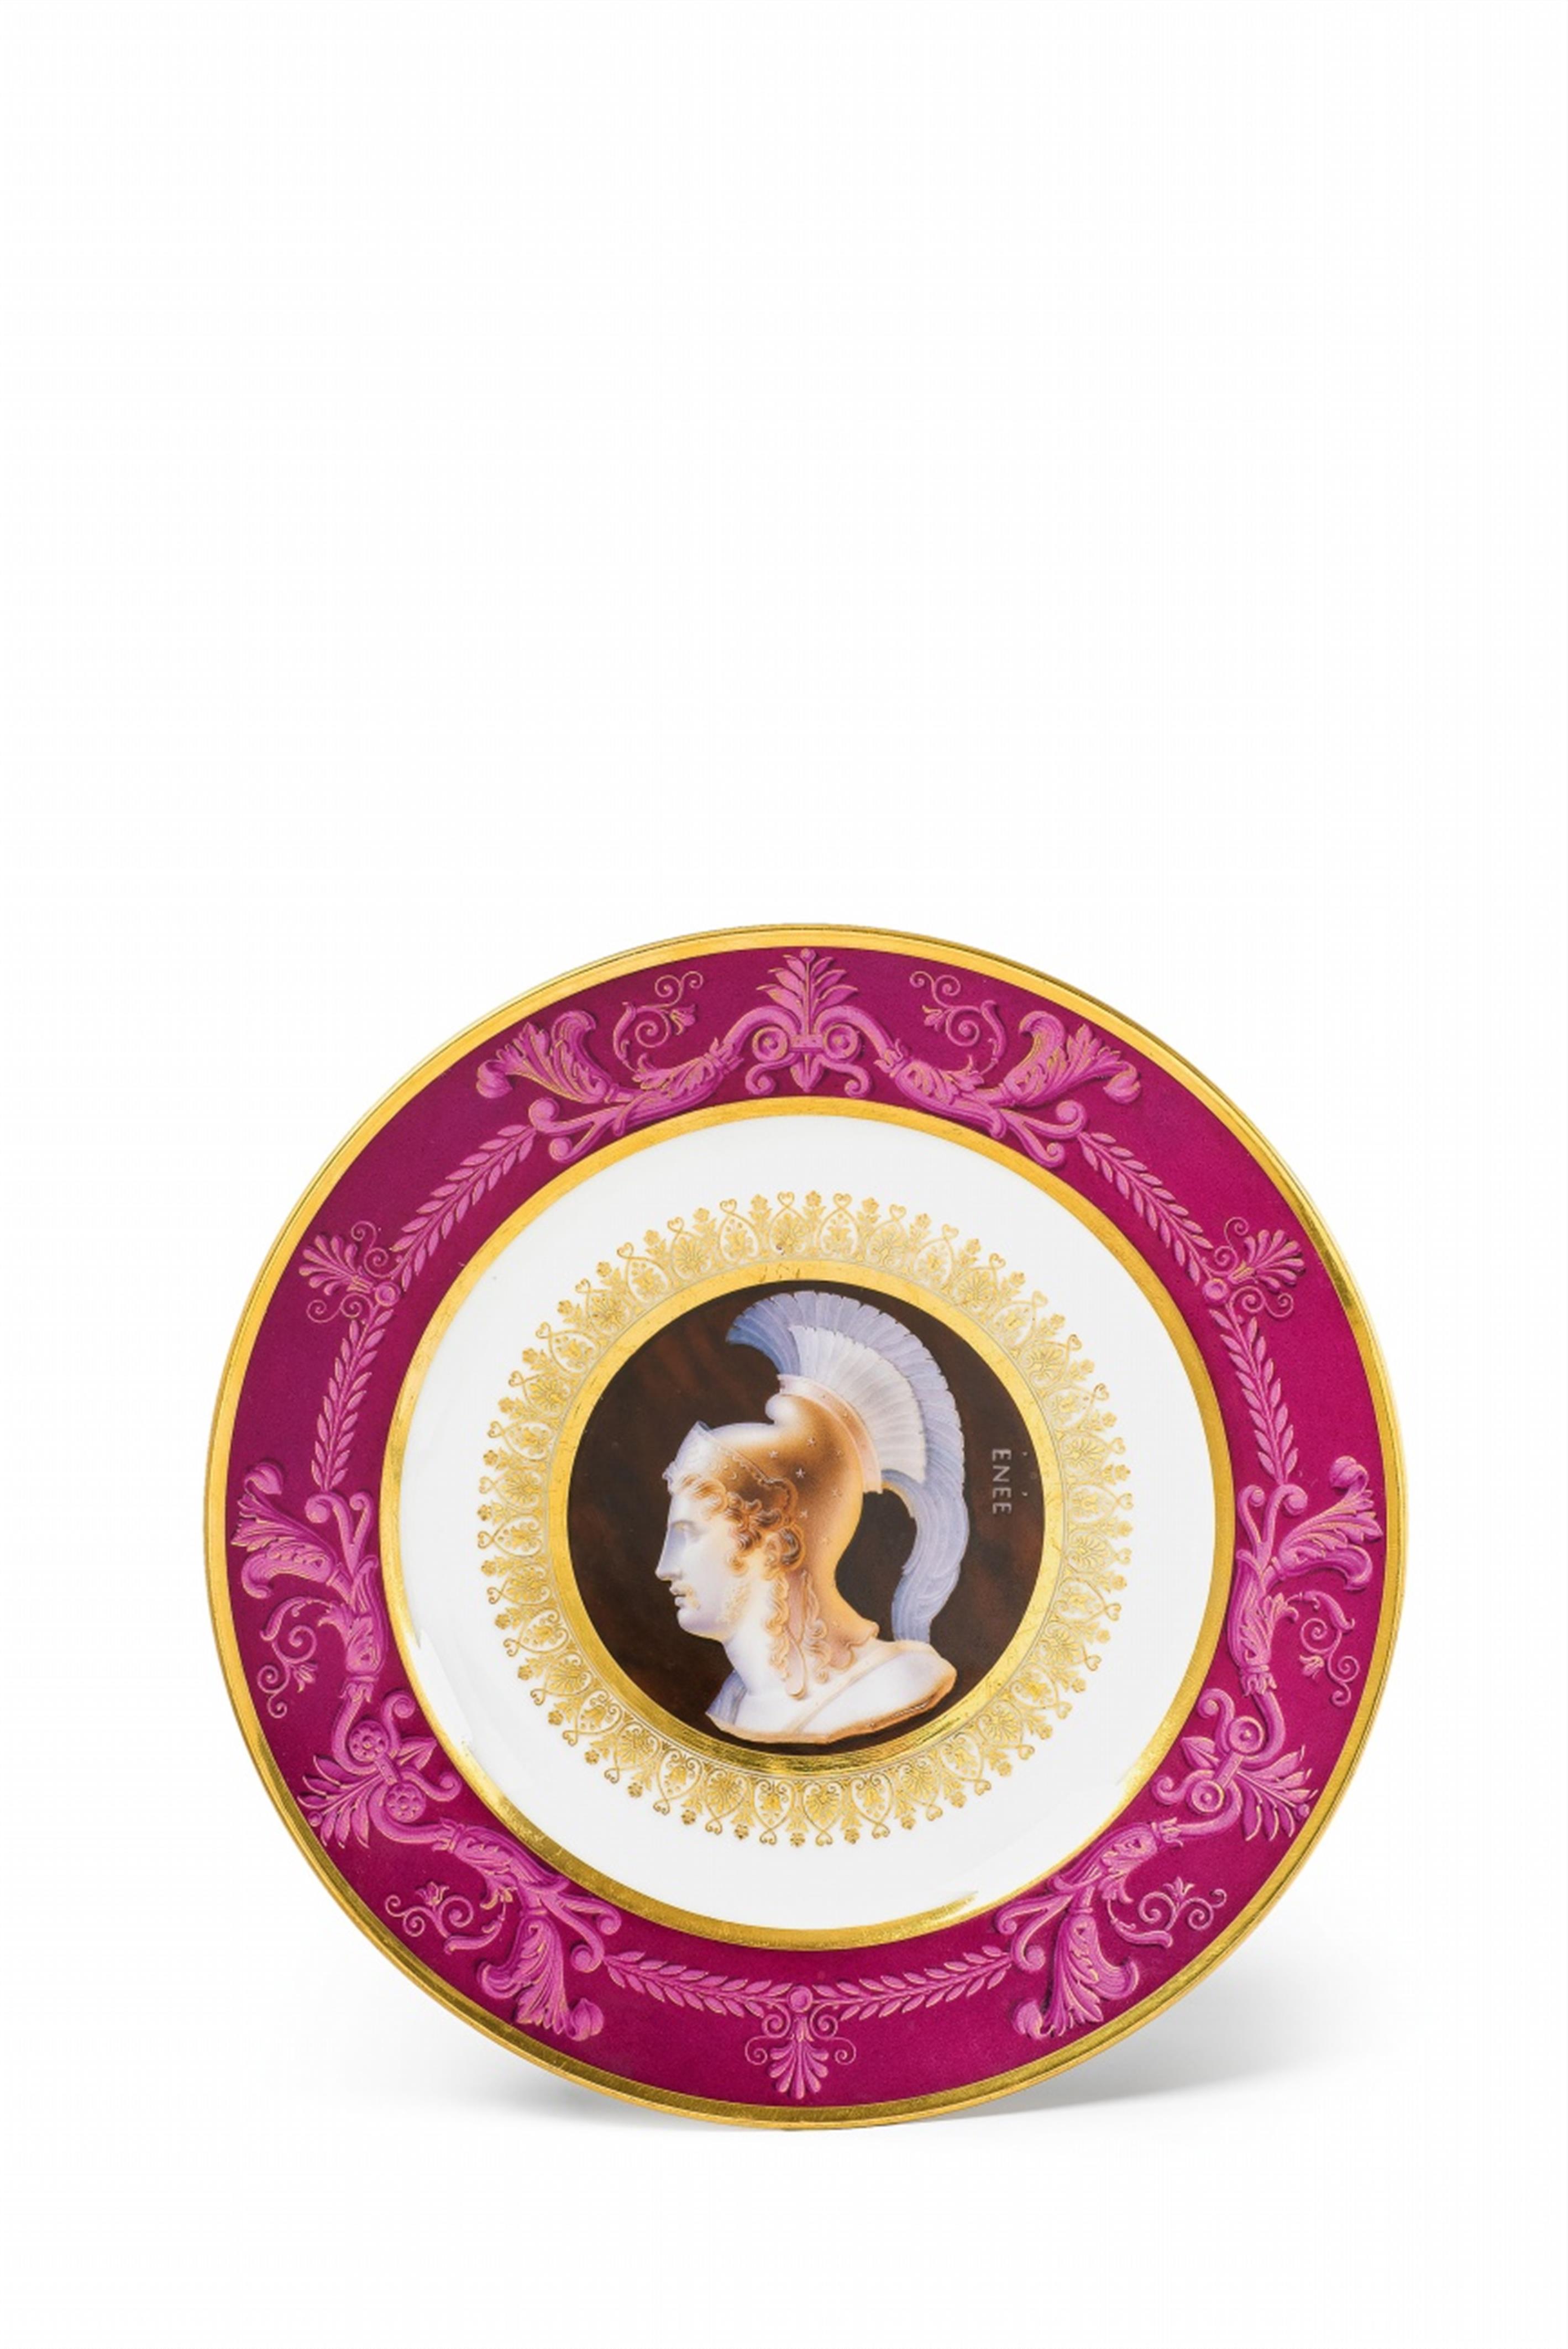 A Sèvres porcelain plate with a cameo portrait of Aeneas - image-1